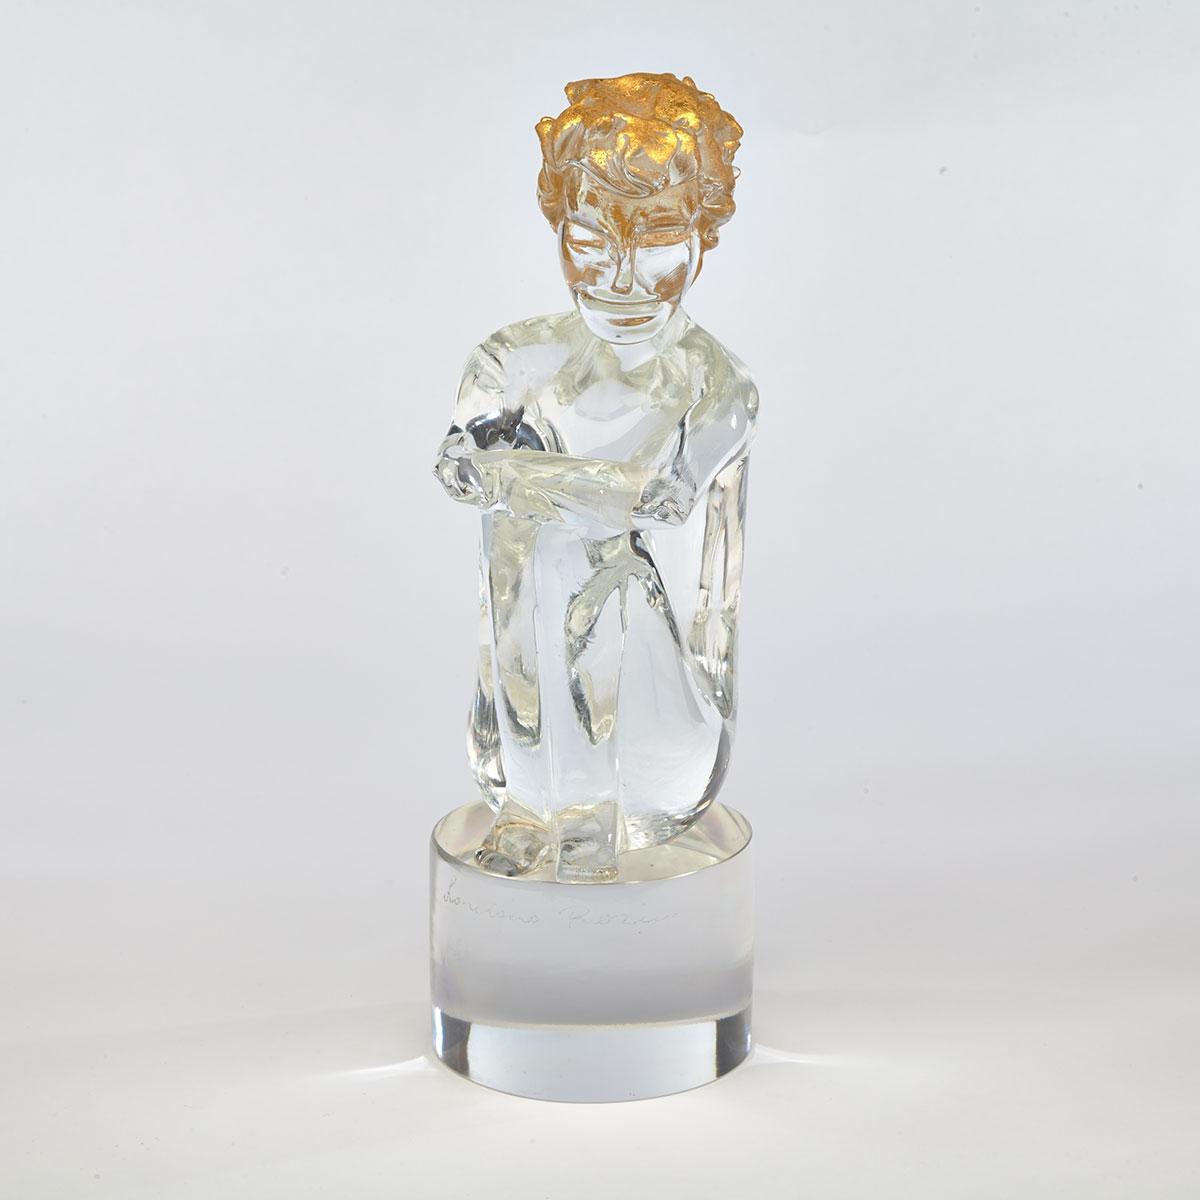 Loredano Rosin (Italian, 1936-1991), Glass Figure of a Seated Boy, 1970s